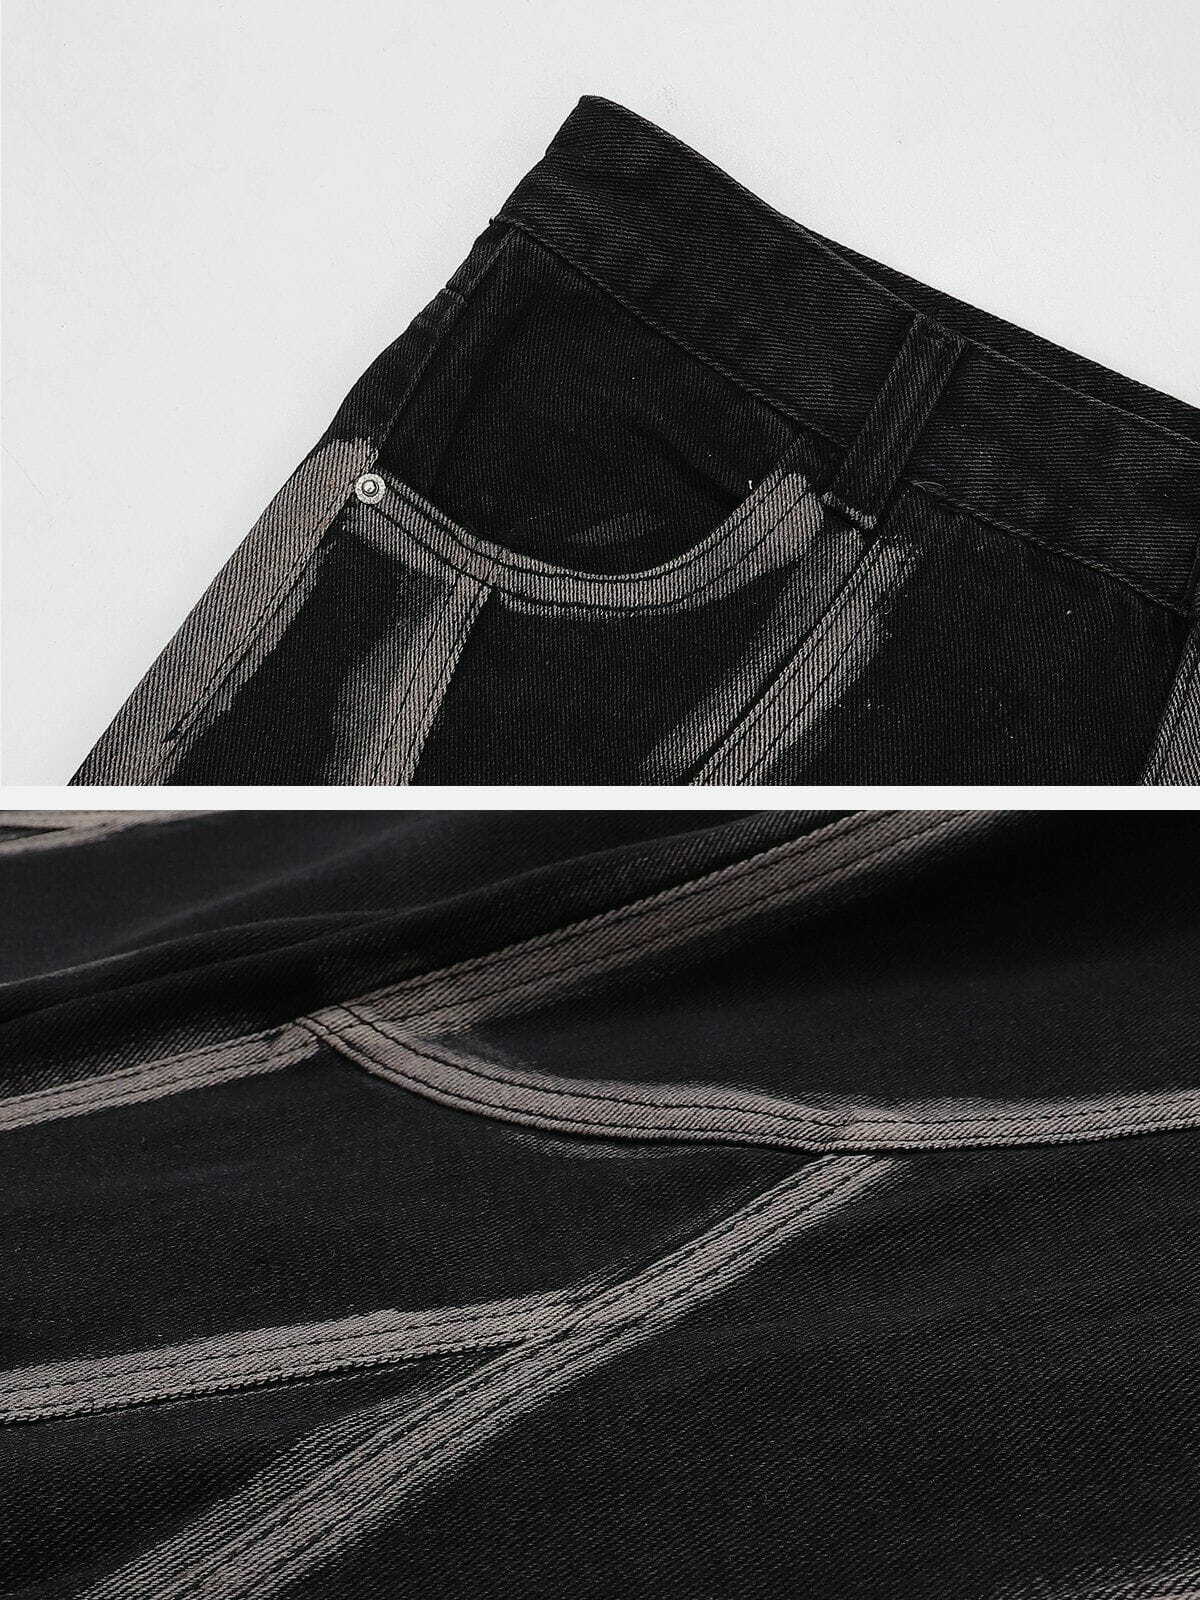 y2k urban line segment jeans sleek & edgy streetwear 4570